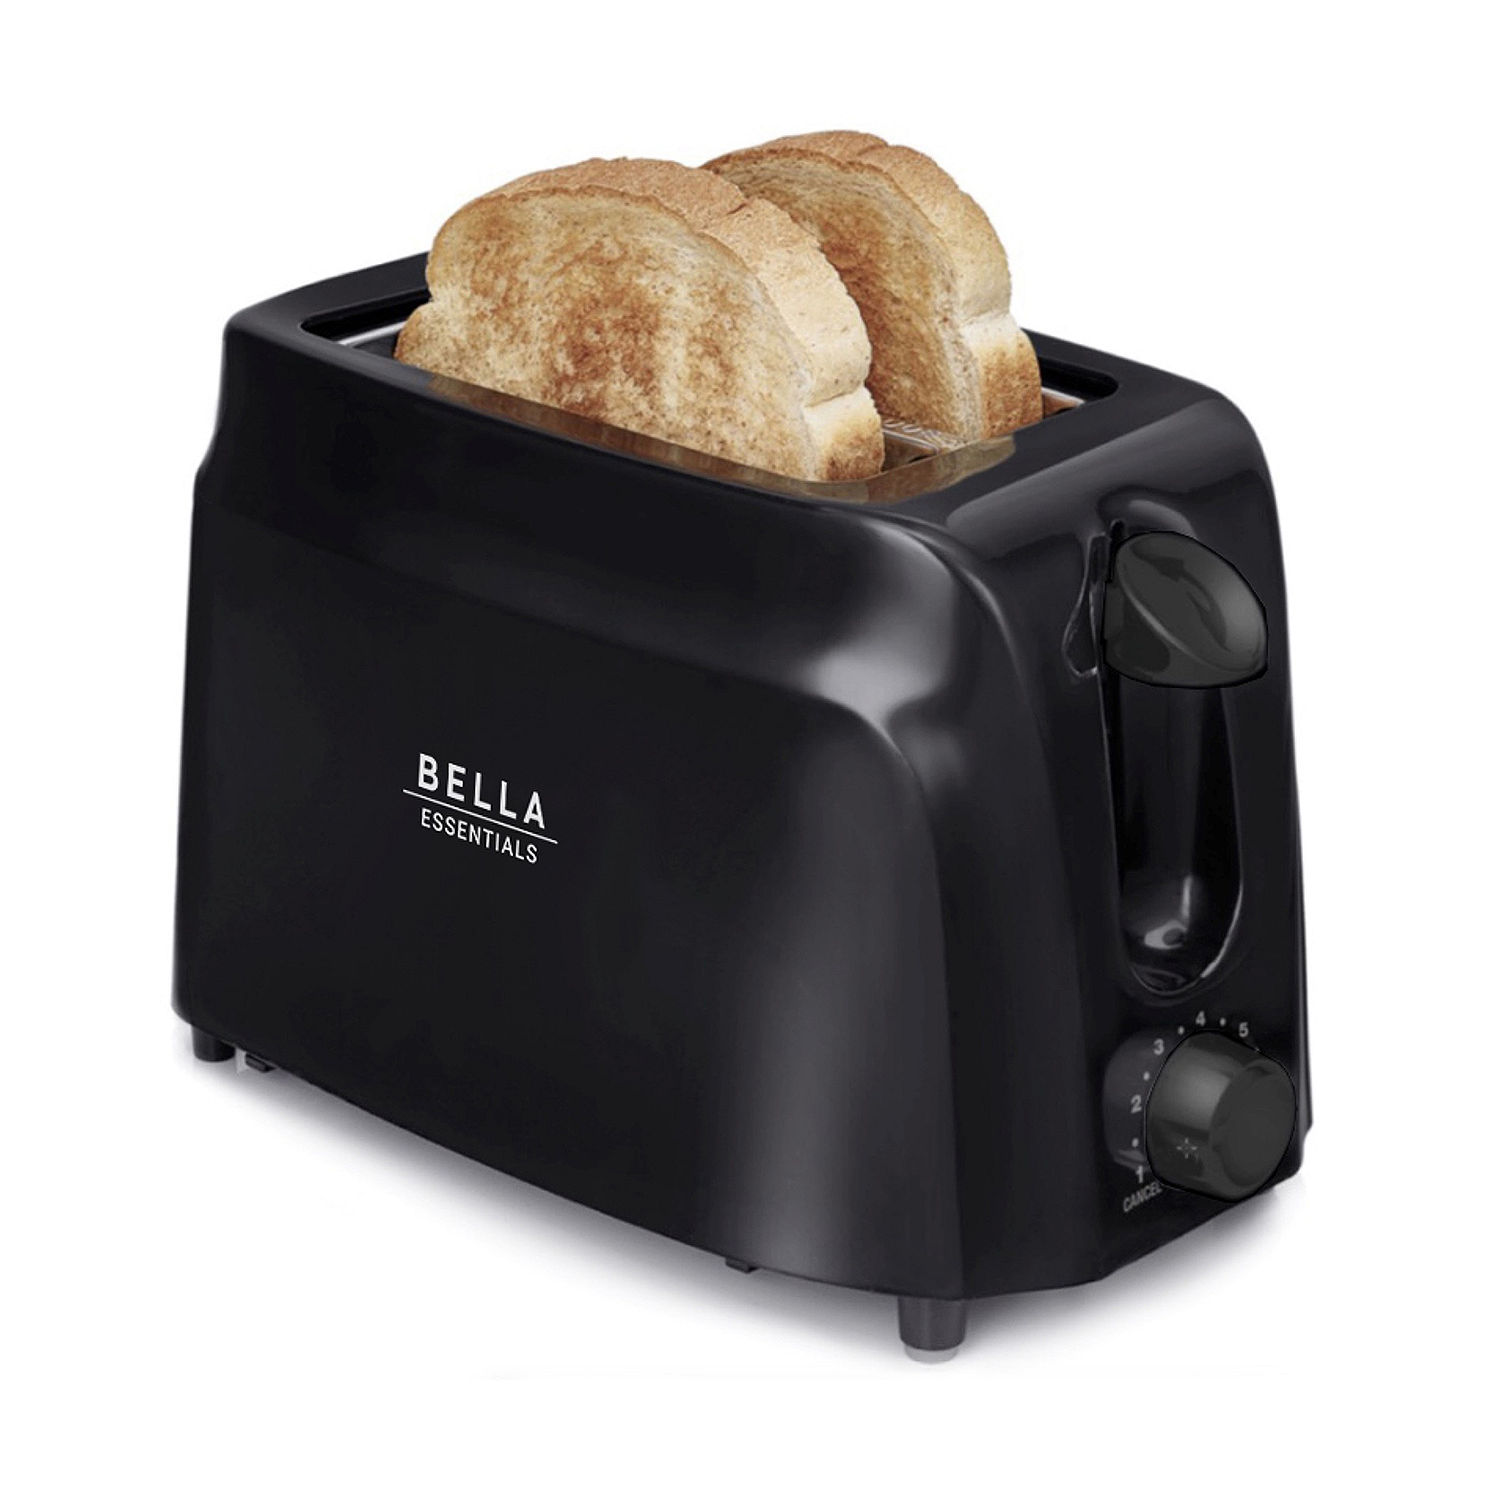 bella-essentials-2-slice-toaster-17421-color-black-jcpenney